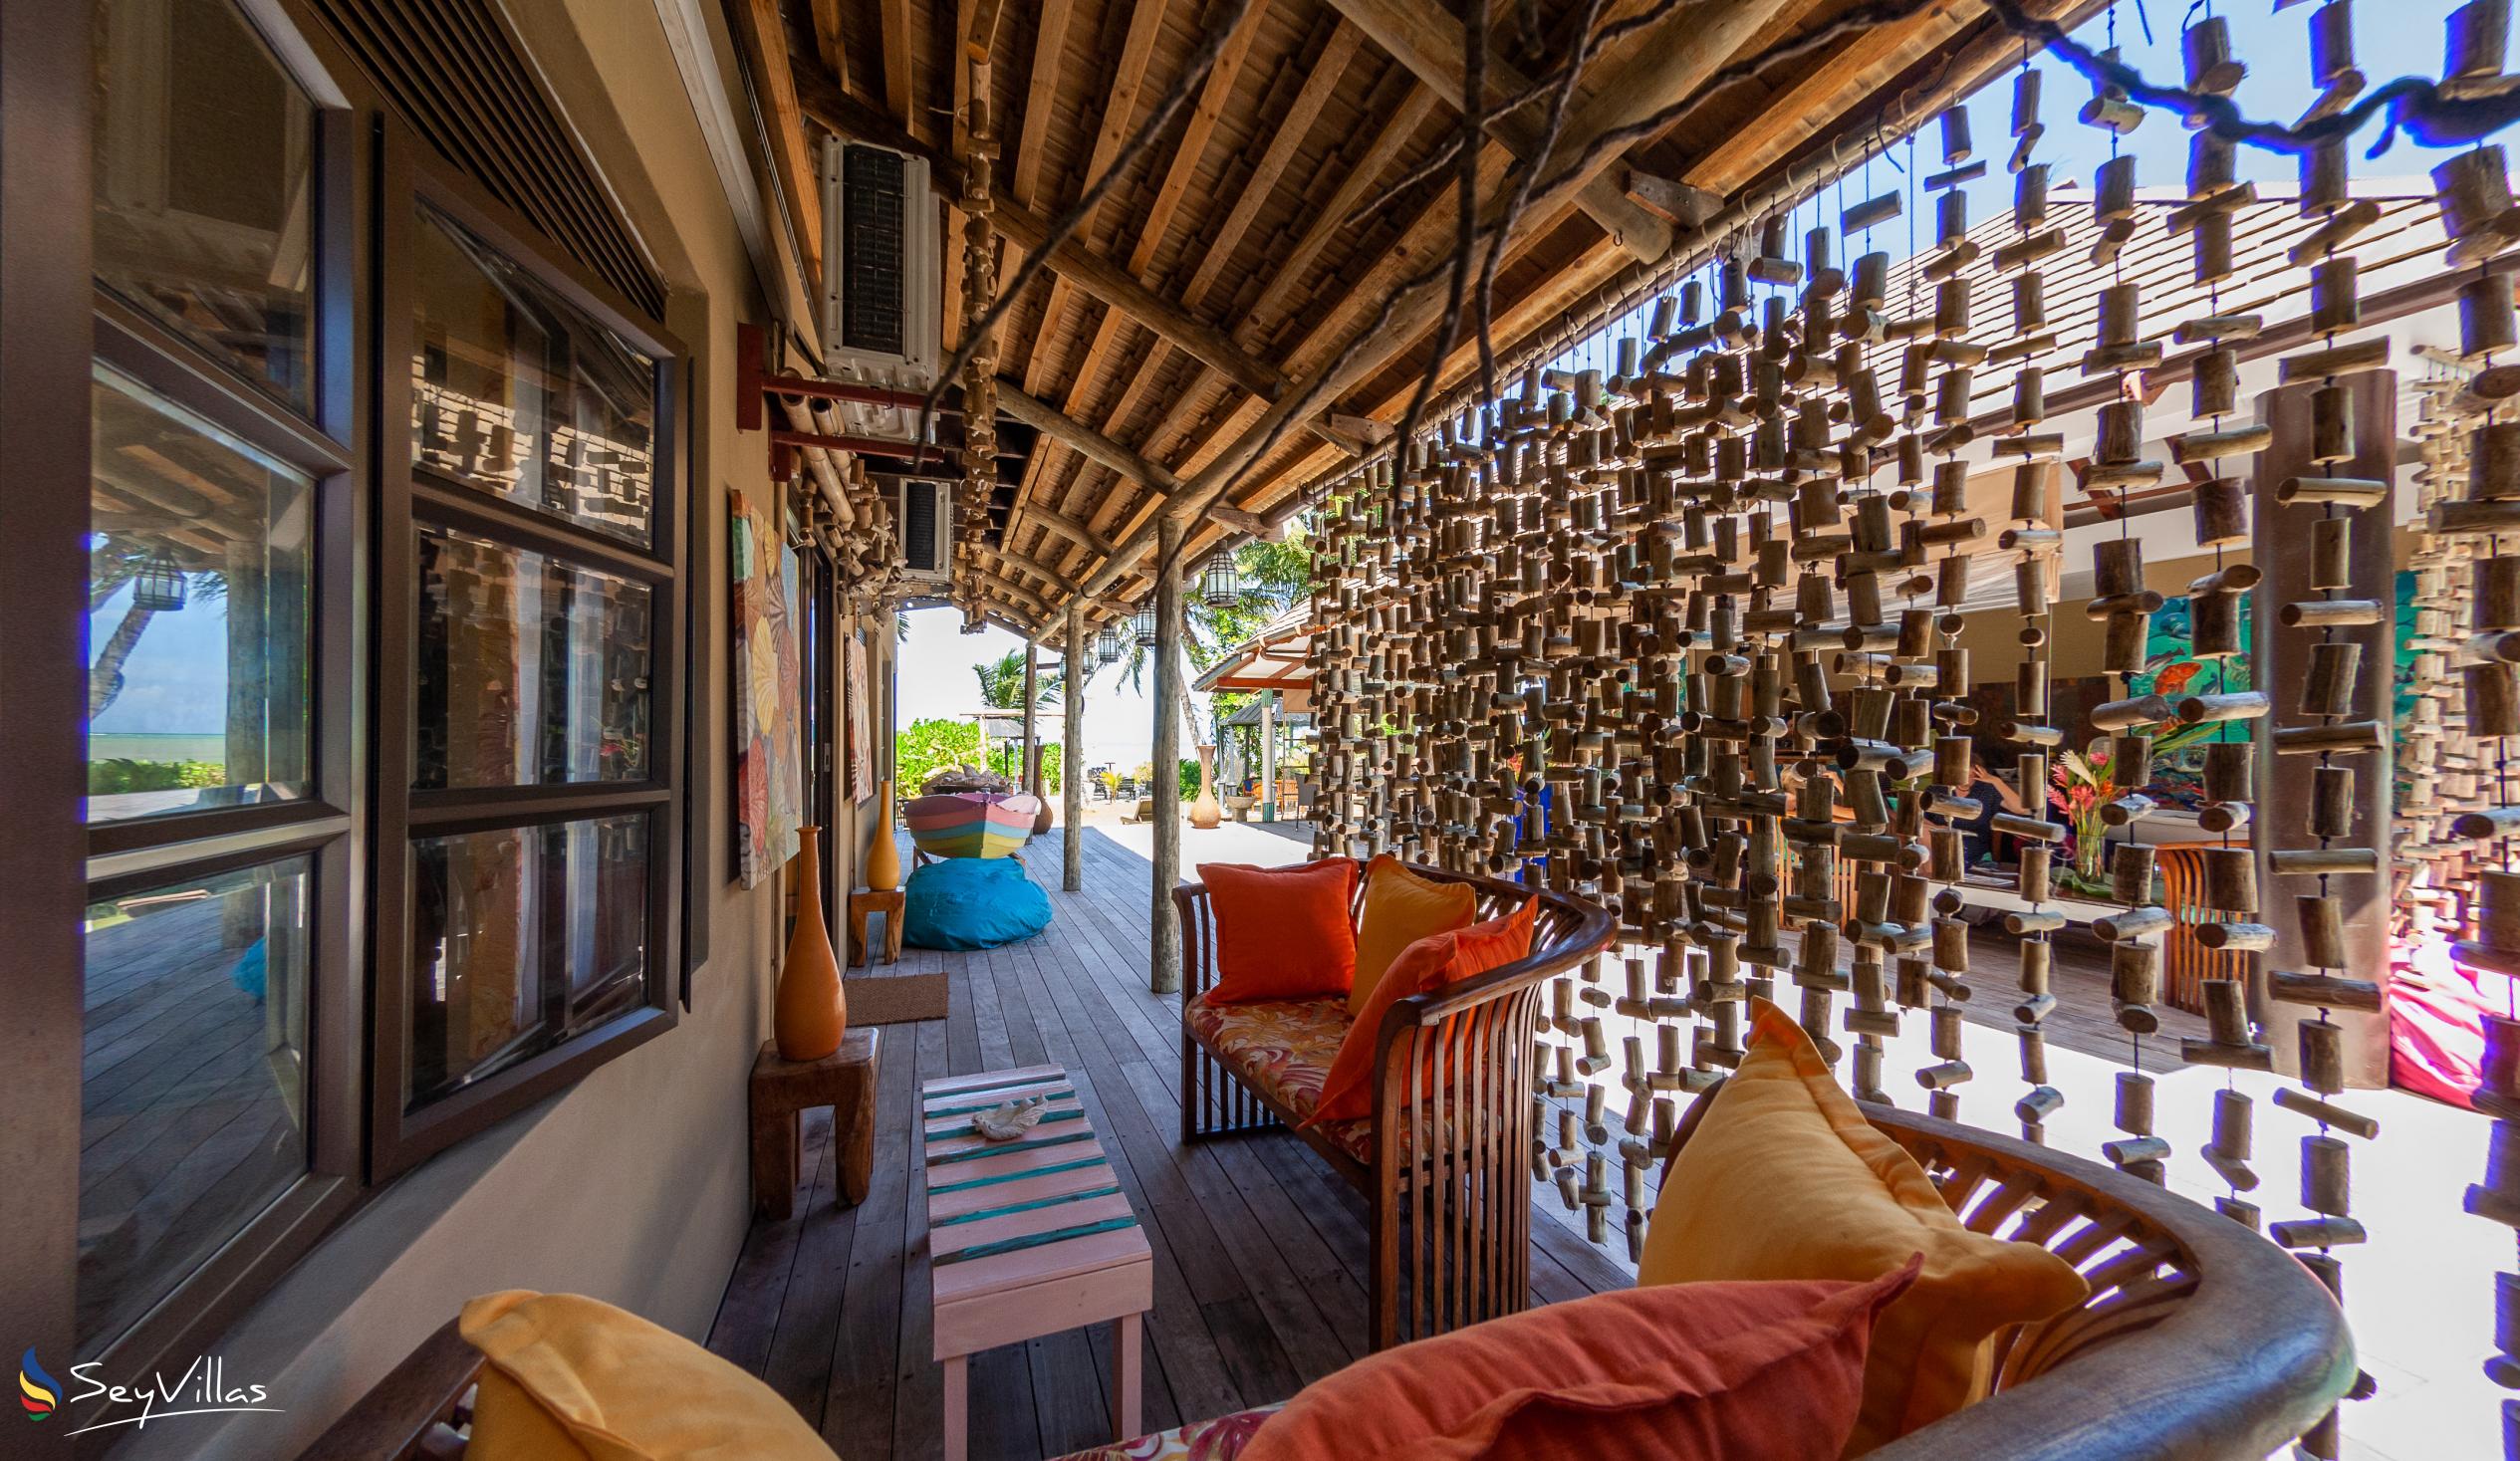 Foto 46: Villas des Alizes - Klassik-Zimmer mit Poolblick - Praslin (Seychellen)